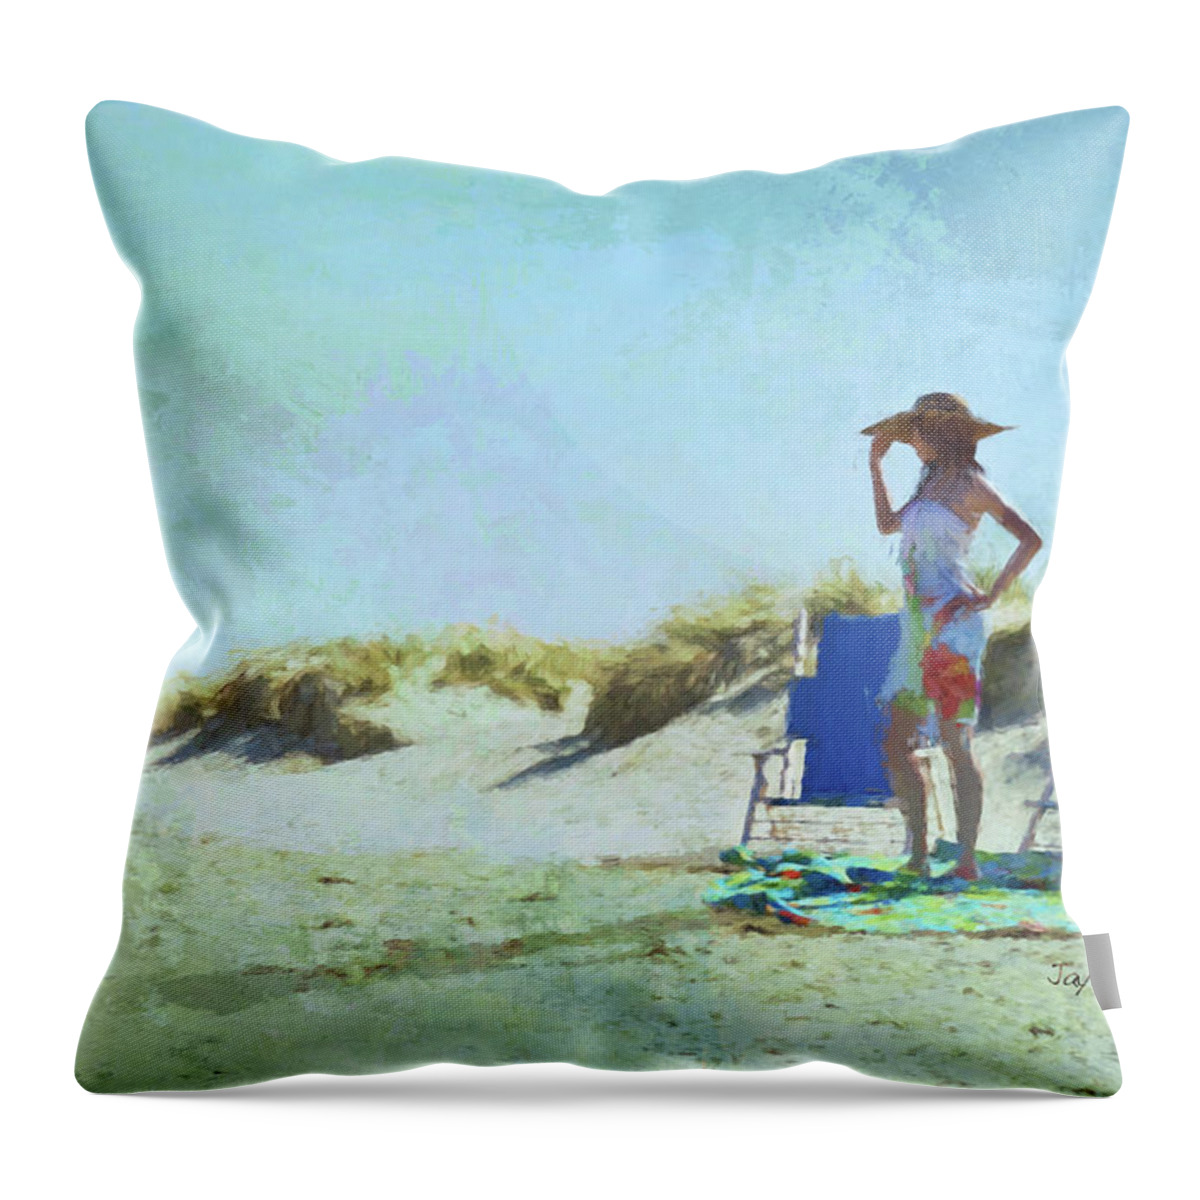 Beach Throw Pillow featuring the digital art A Day at the Beach by Jayne Wilson